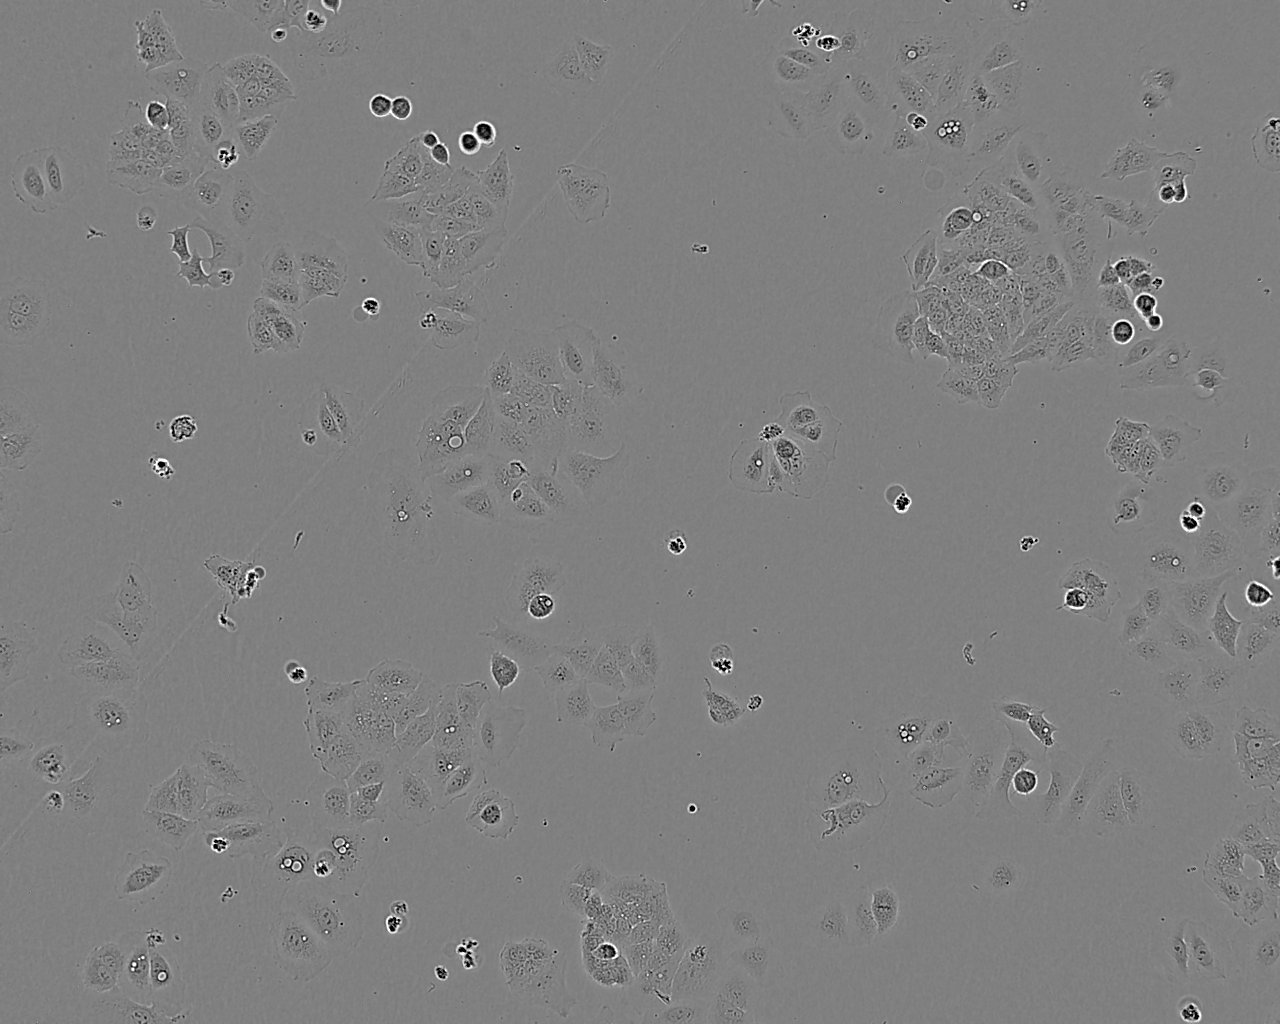 J774 Cell:小鼠巨噬细胞系,J774 Cell